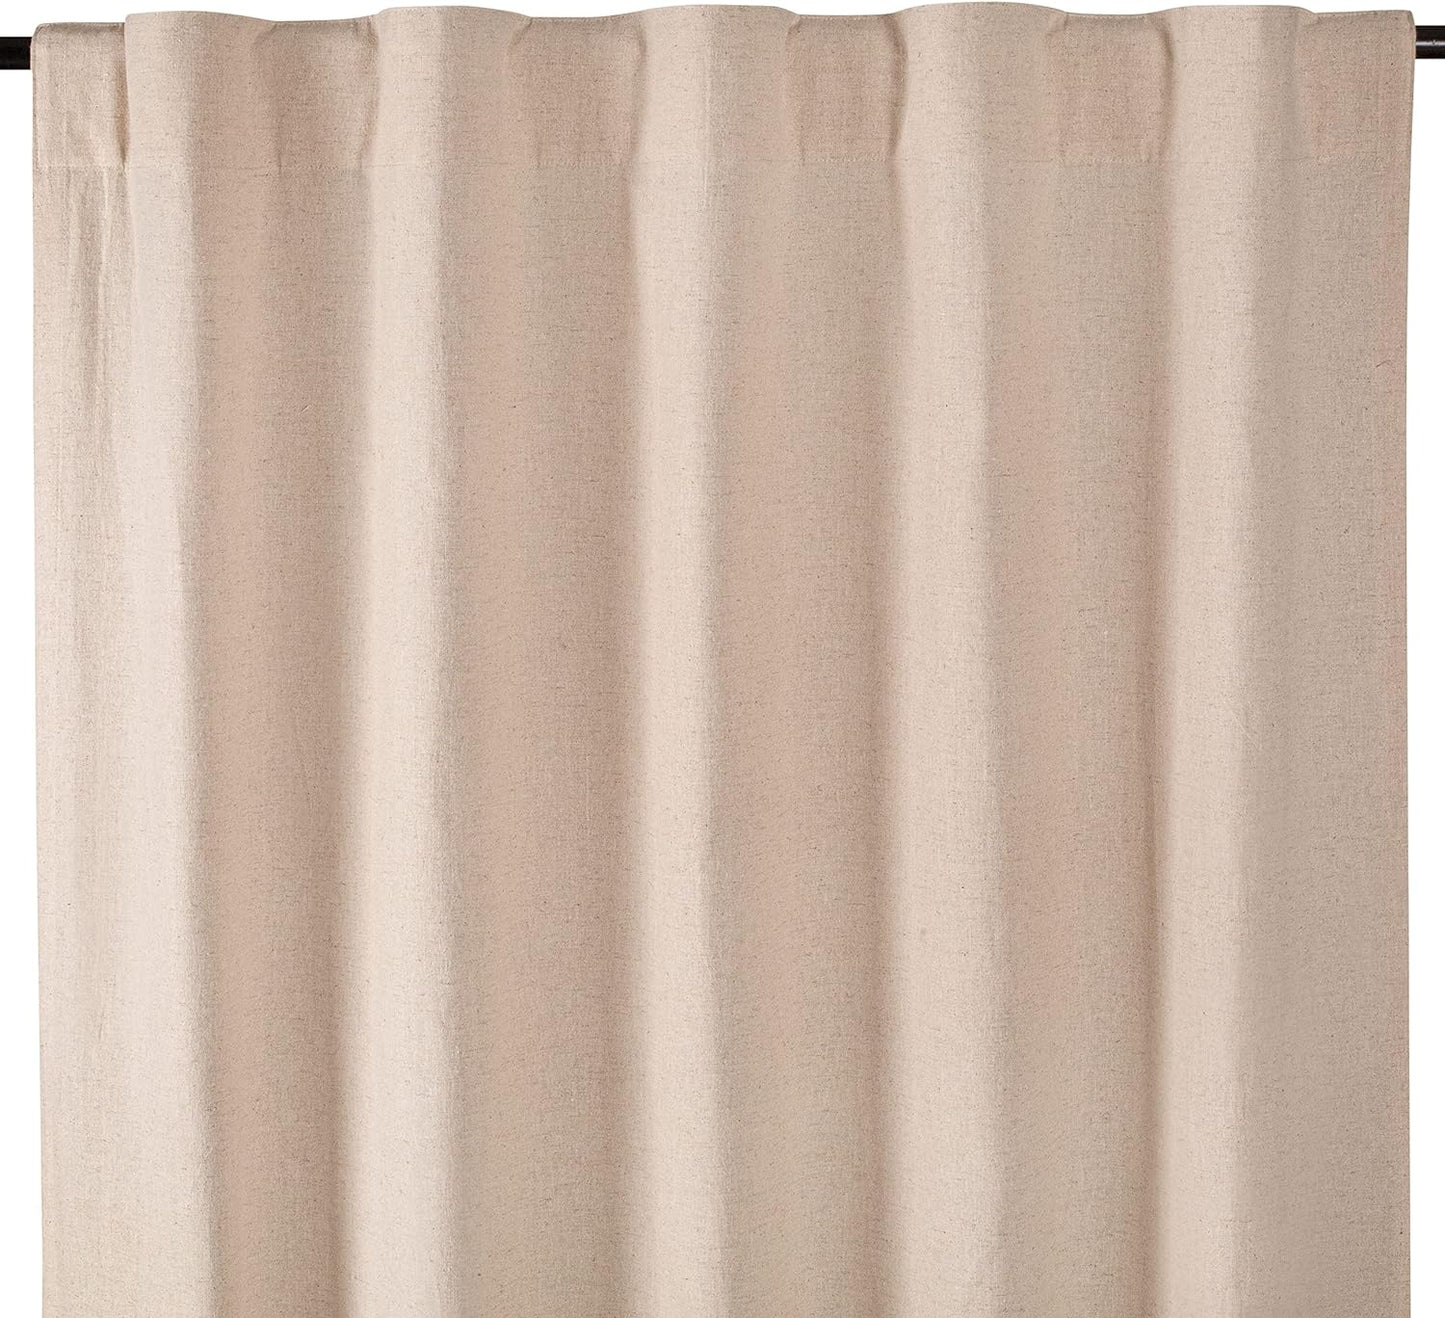 Bedding Craft Curtains,Linen Curtains,Natural Curtains,Linen Drapes,Linen Room Darkening Curtains,Flax Linen Curtain,Curtain & Drapes,Natural Linen Curtains,Taupe Linen Curtains 108 Inch  Bedding Craft   